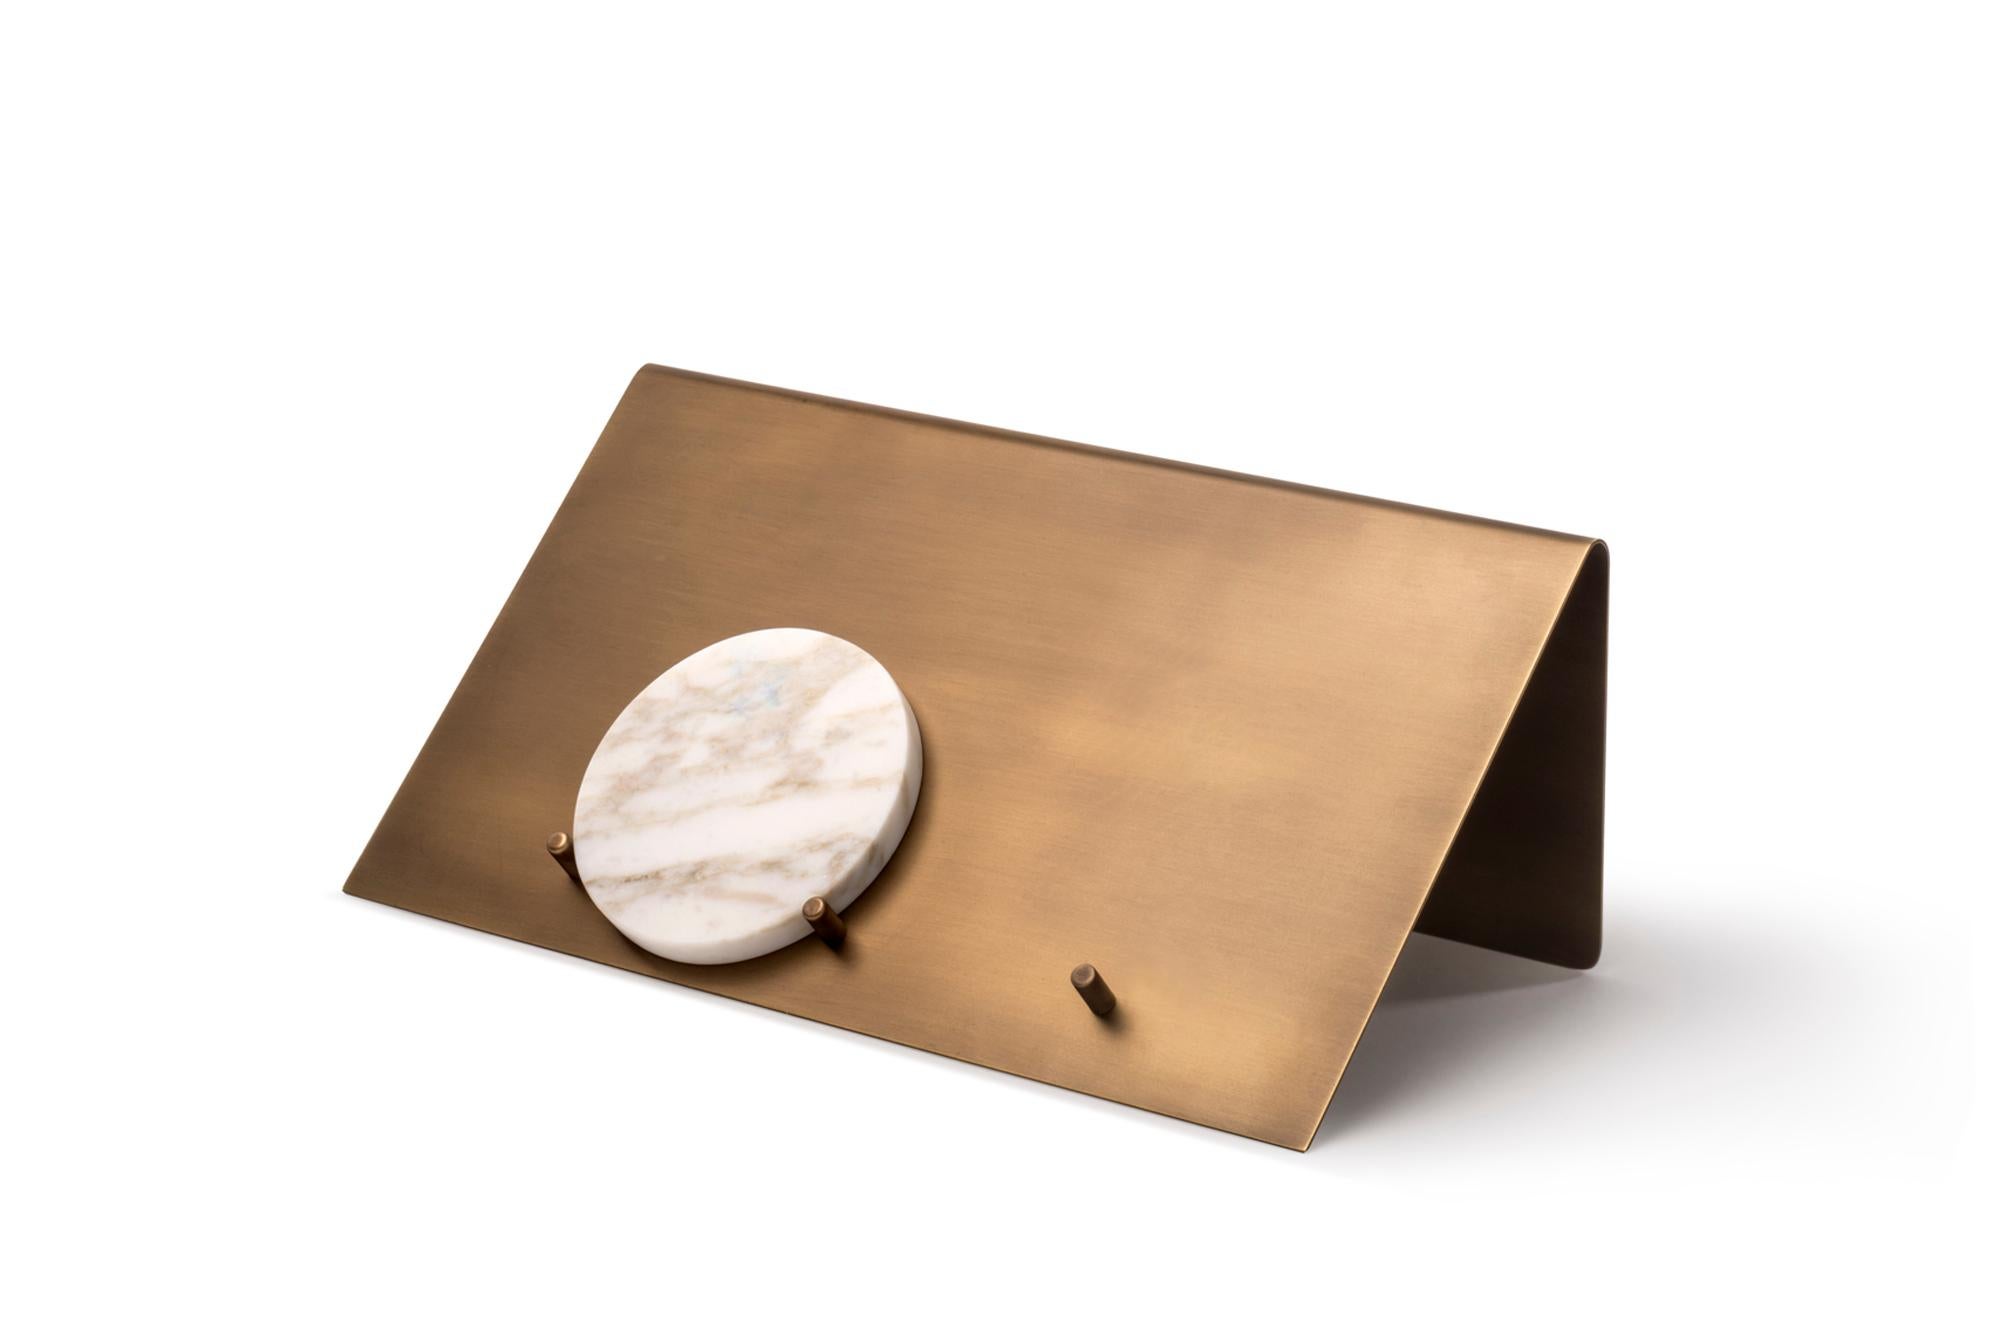 Salvatori Balancing Letter Holder in Calacatta Vagli & Brass by Studiocharlie For Sale